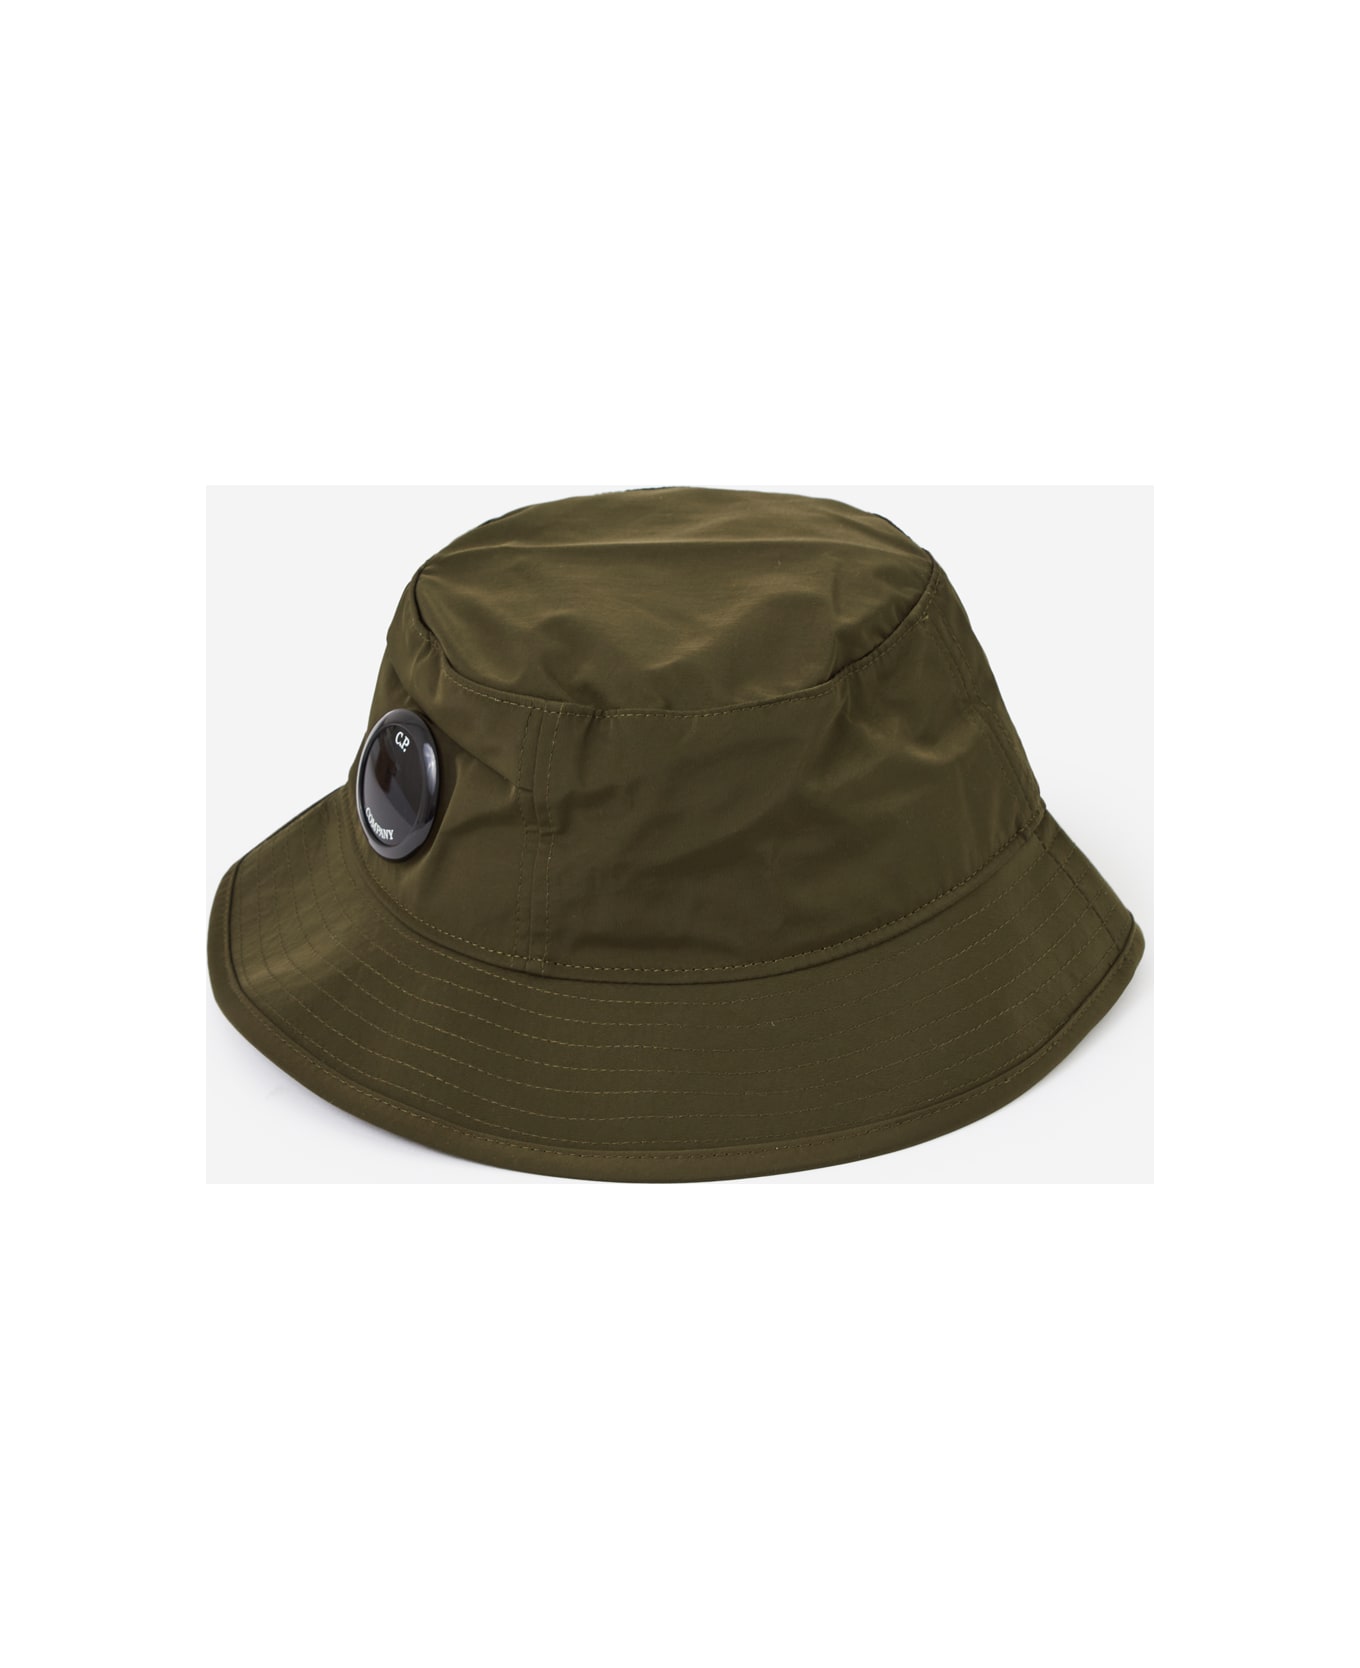 C.P. Company Hats - Ivy Green 帽子